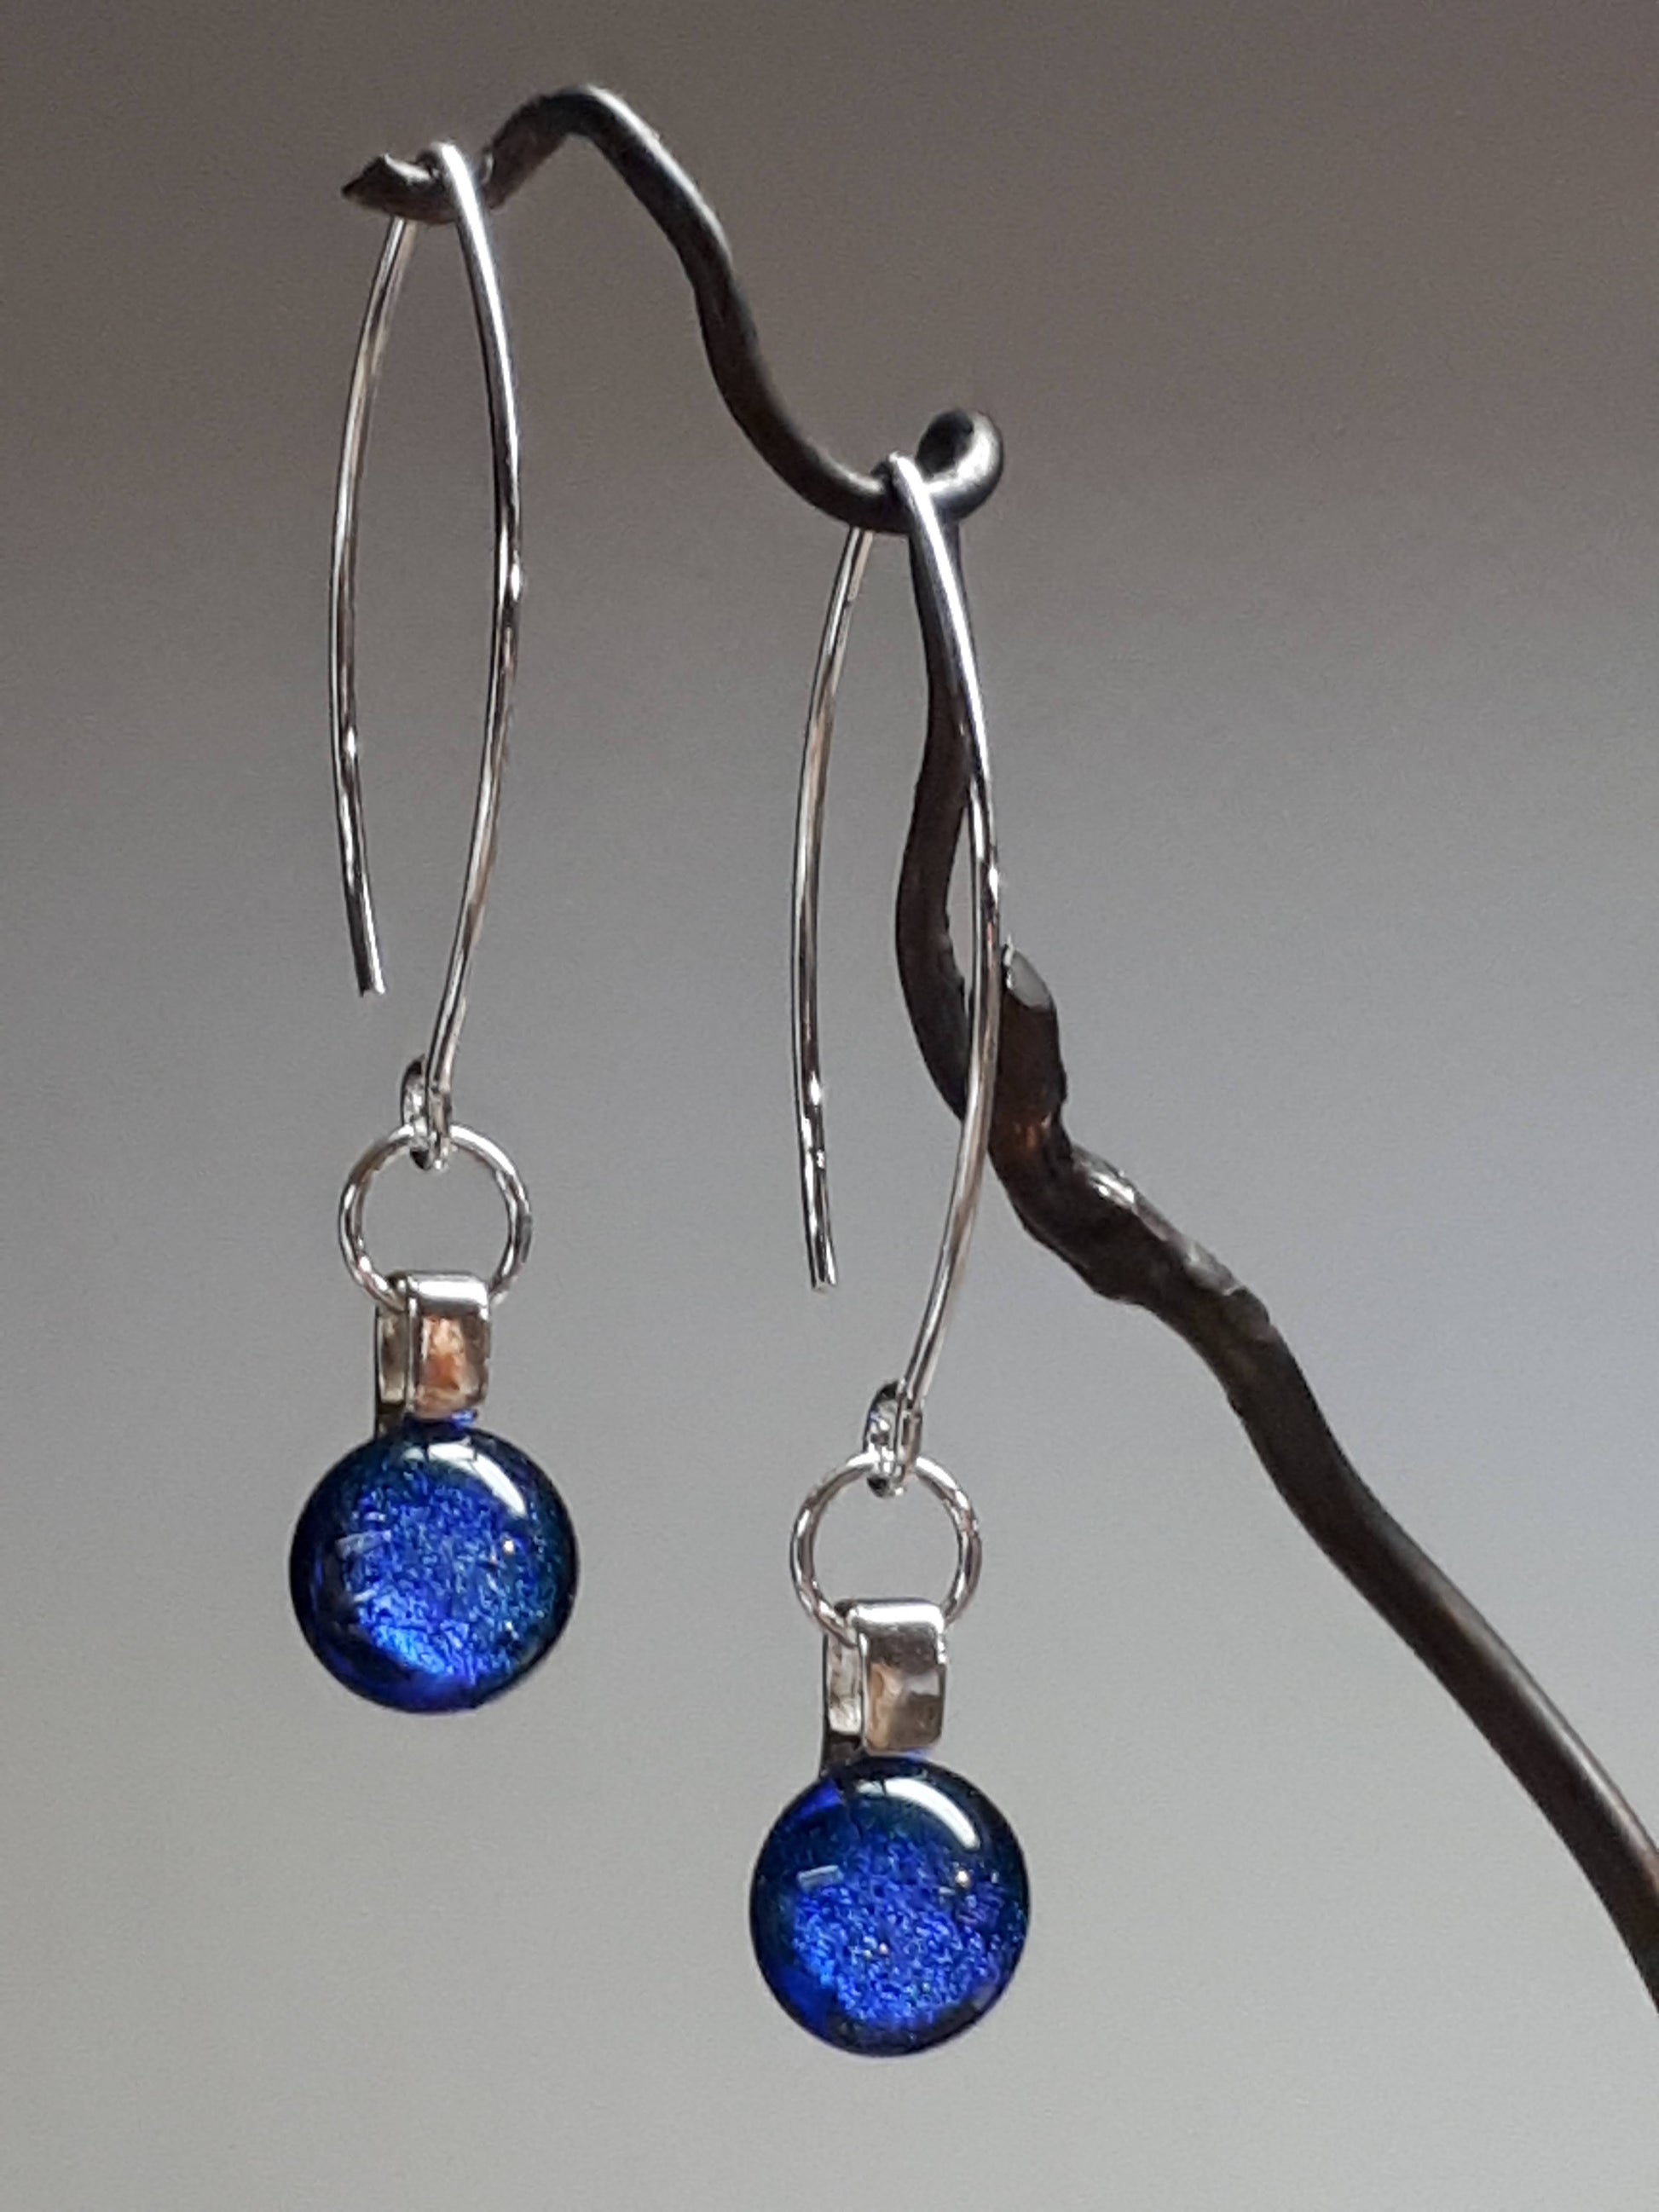 Stylish blue lightweight handmade glass earrings